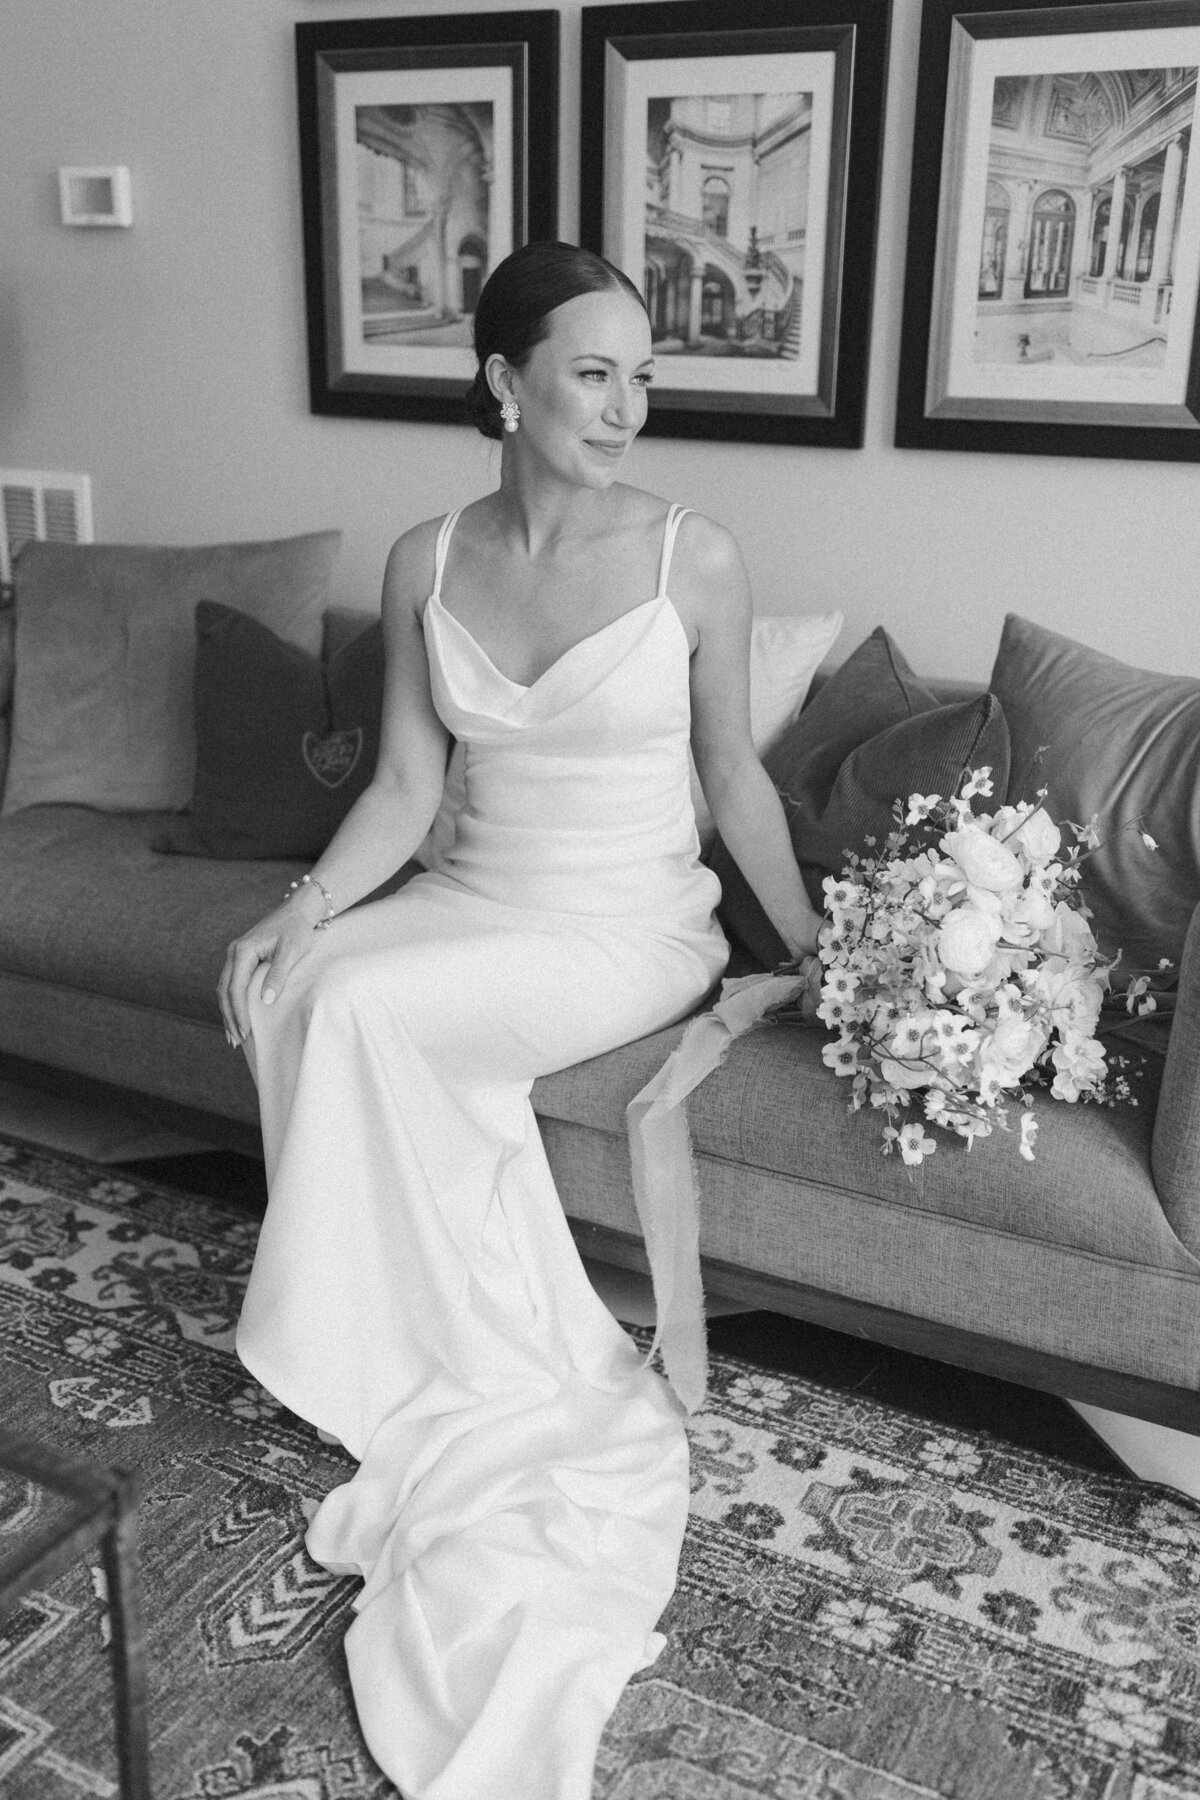 Sarah Rae Floral Designs Wedding Event Florist Flowers Kentucky Chic Whimsical Romantic Weddings7